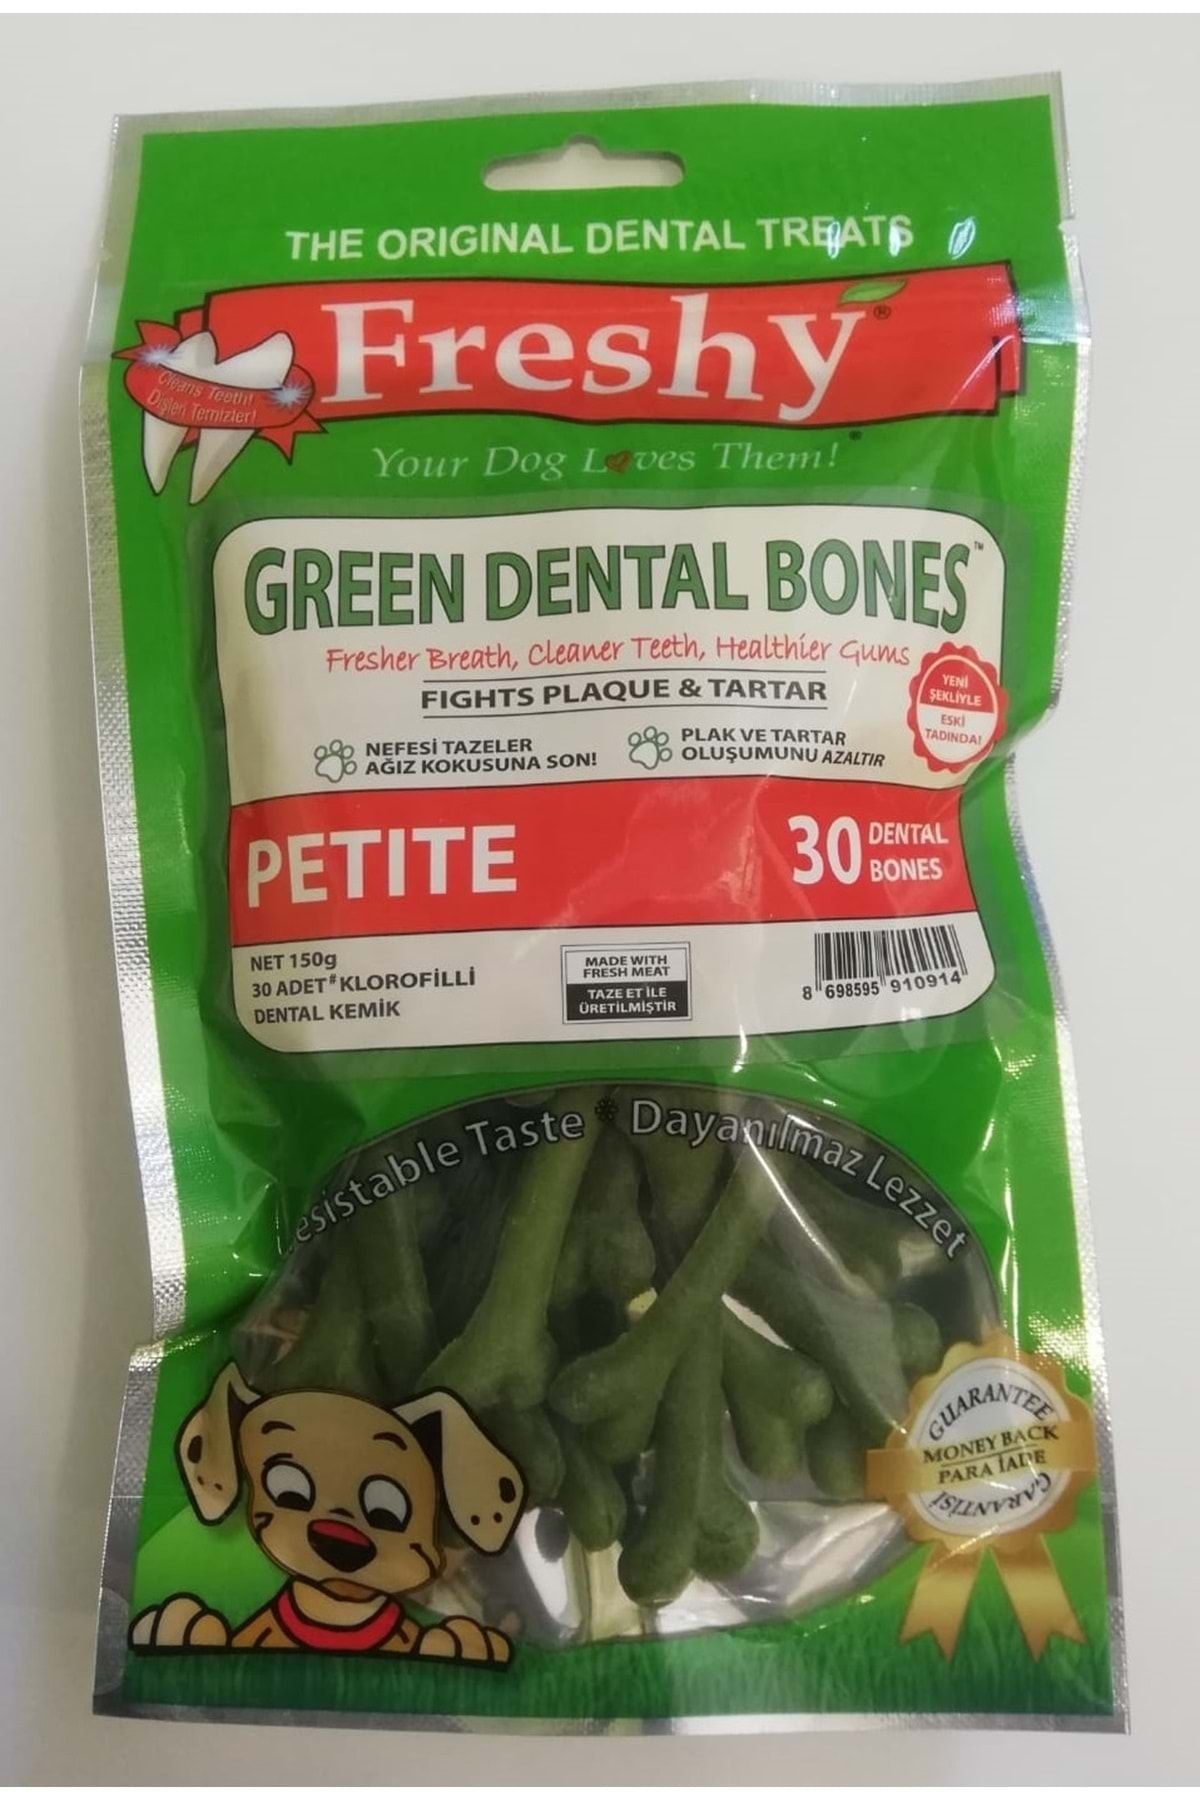 Freshy Green Dental Bones Petite 30 Adet Dental.